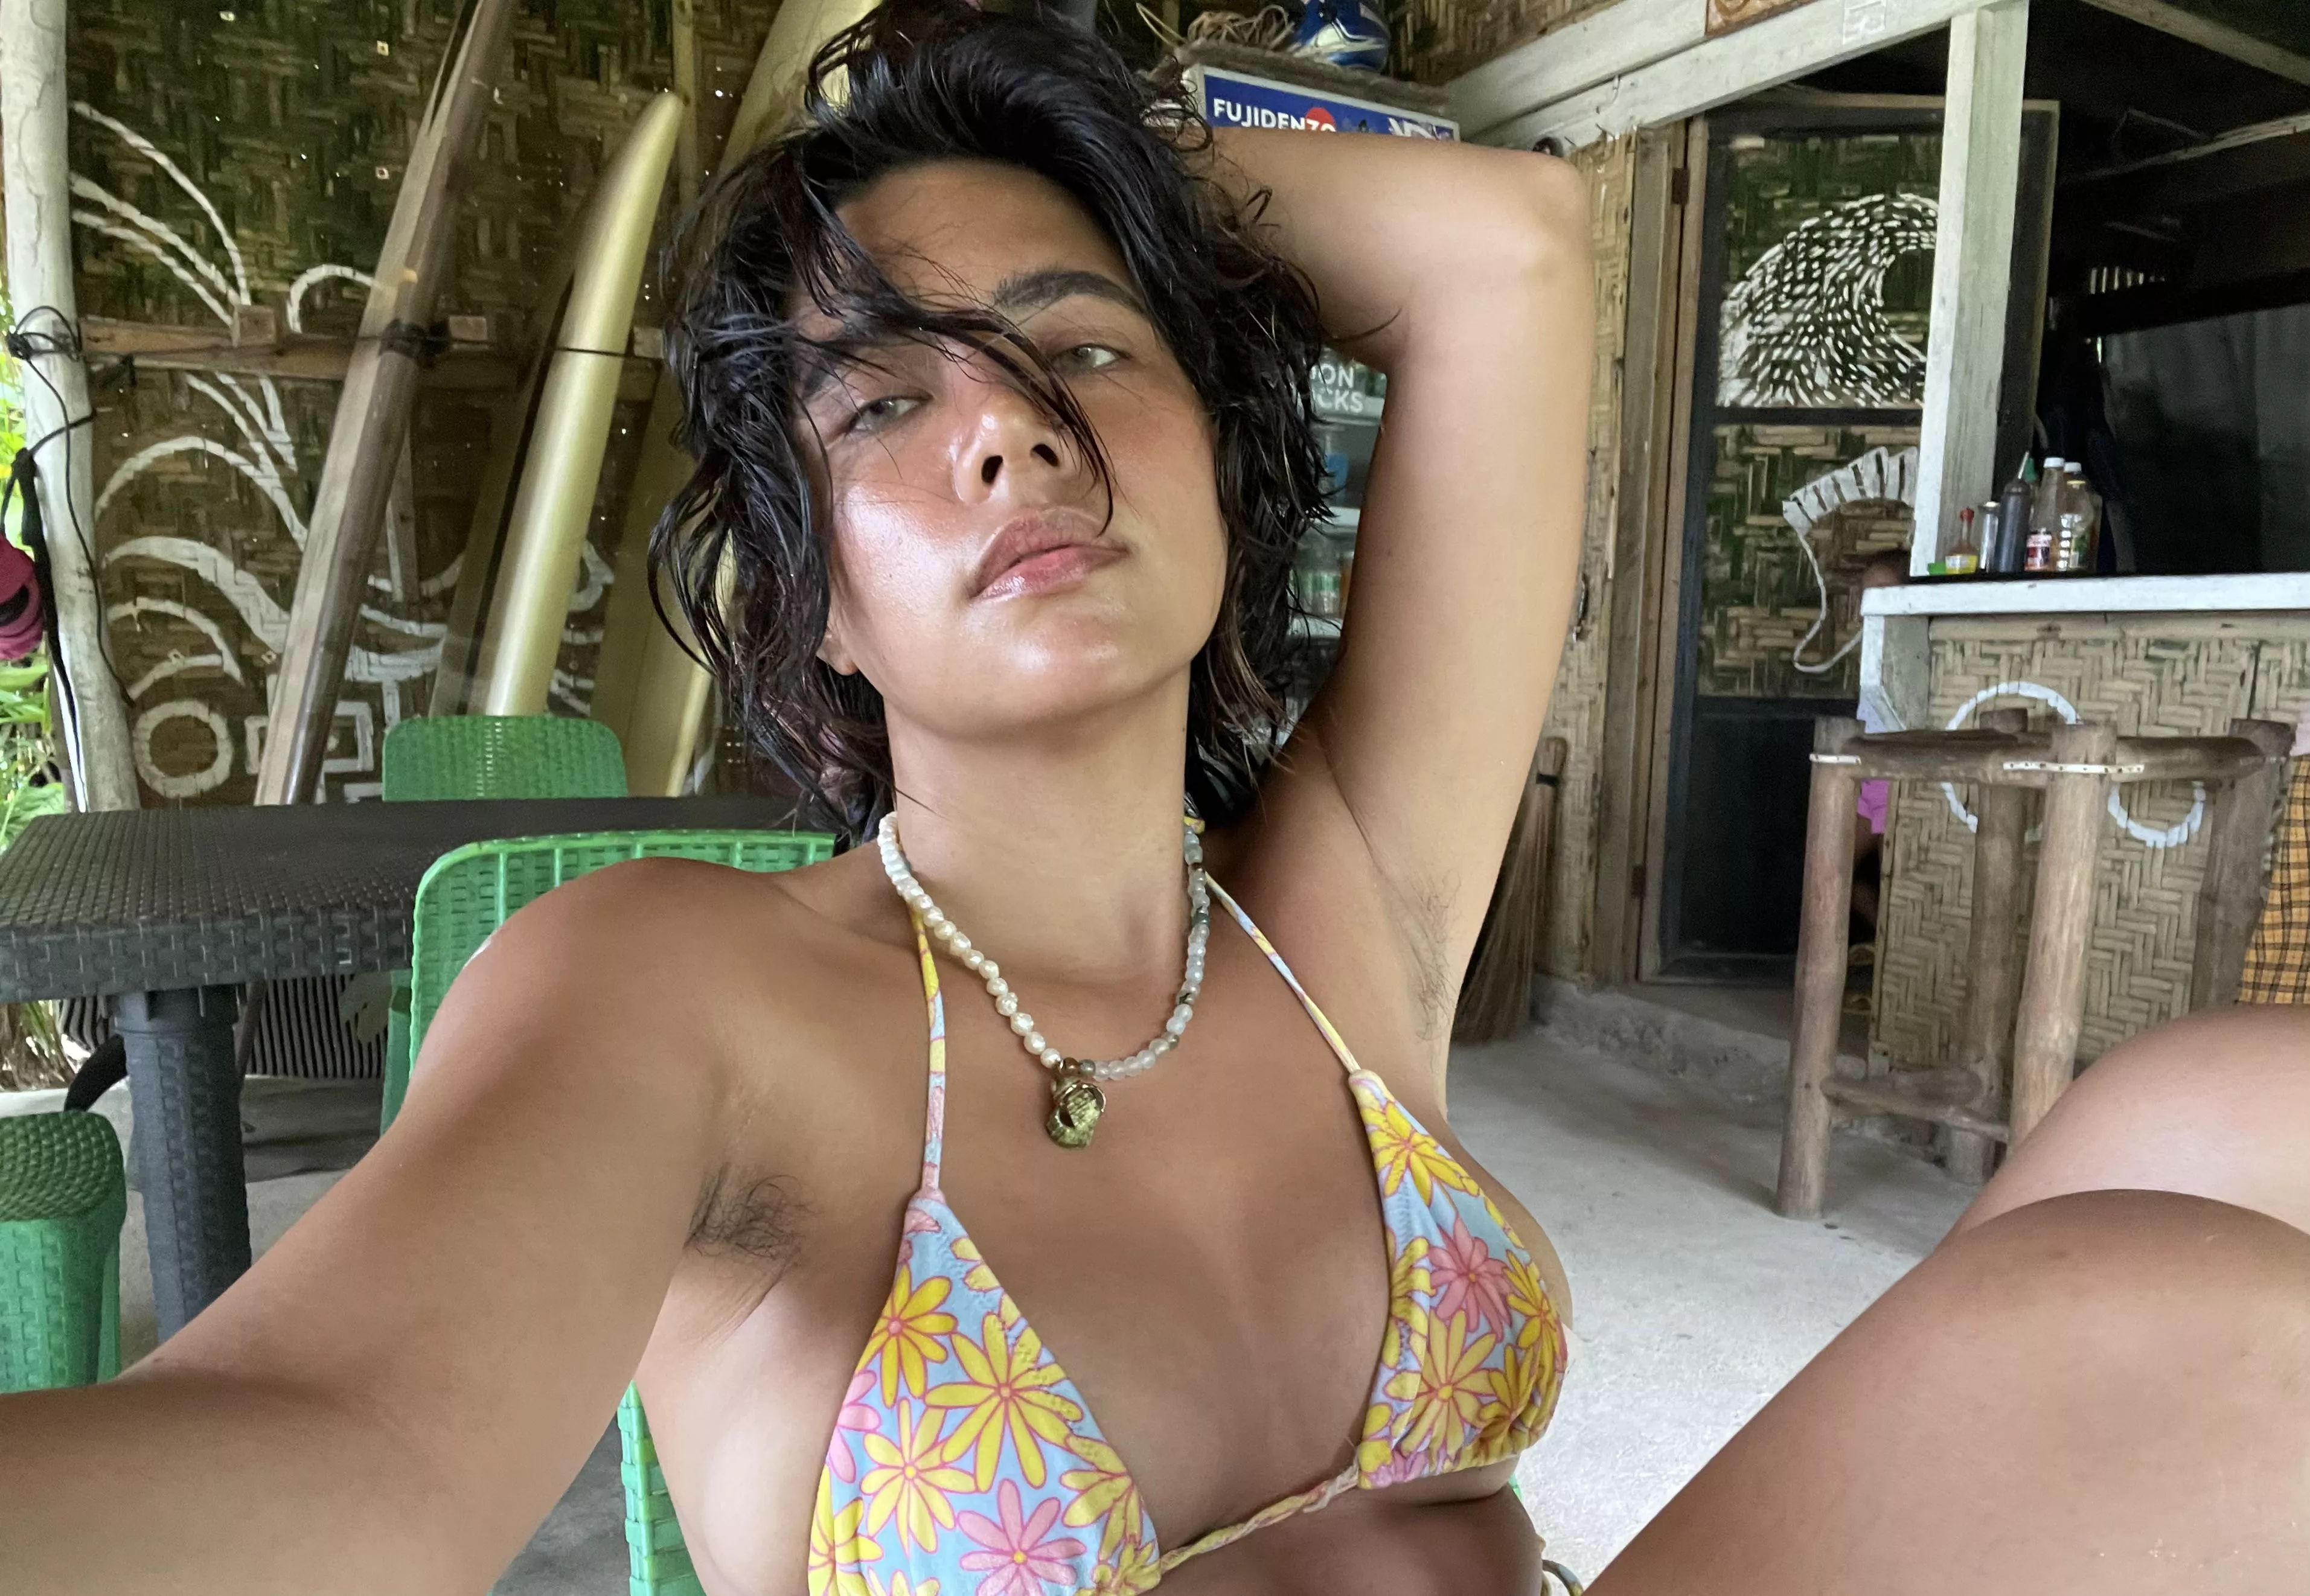 Pinoy Porn German - Filipino x german nudes in MixedRaceGirls | Onlynudes.org